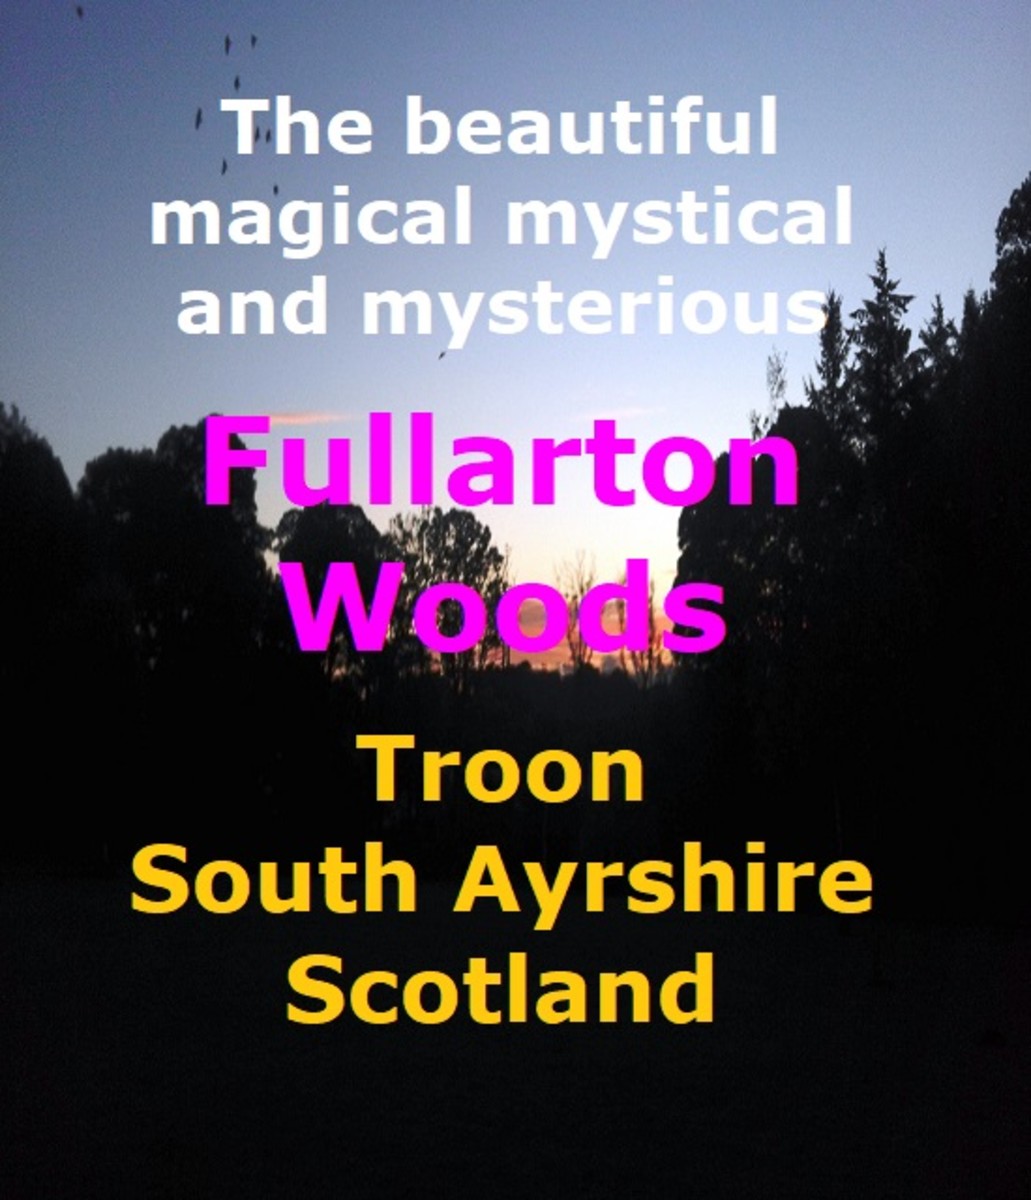 Fullarton Woods: Troon South Ayrshire Scotland